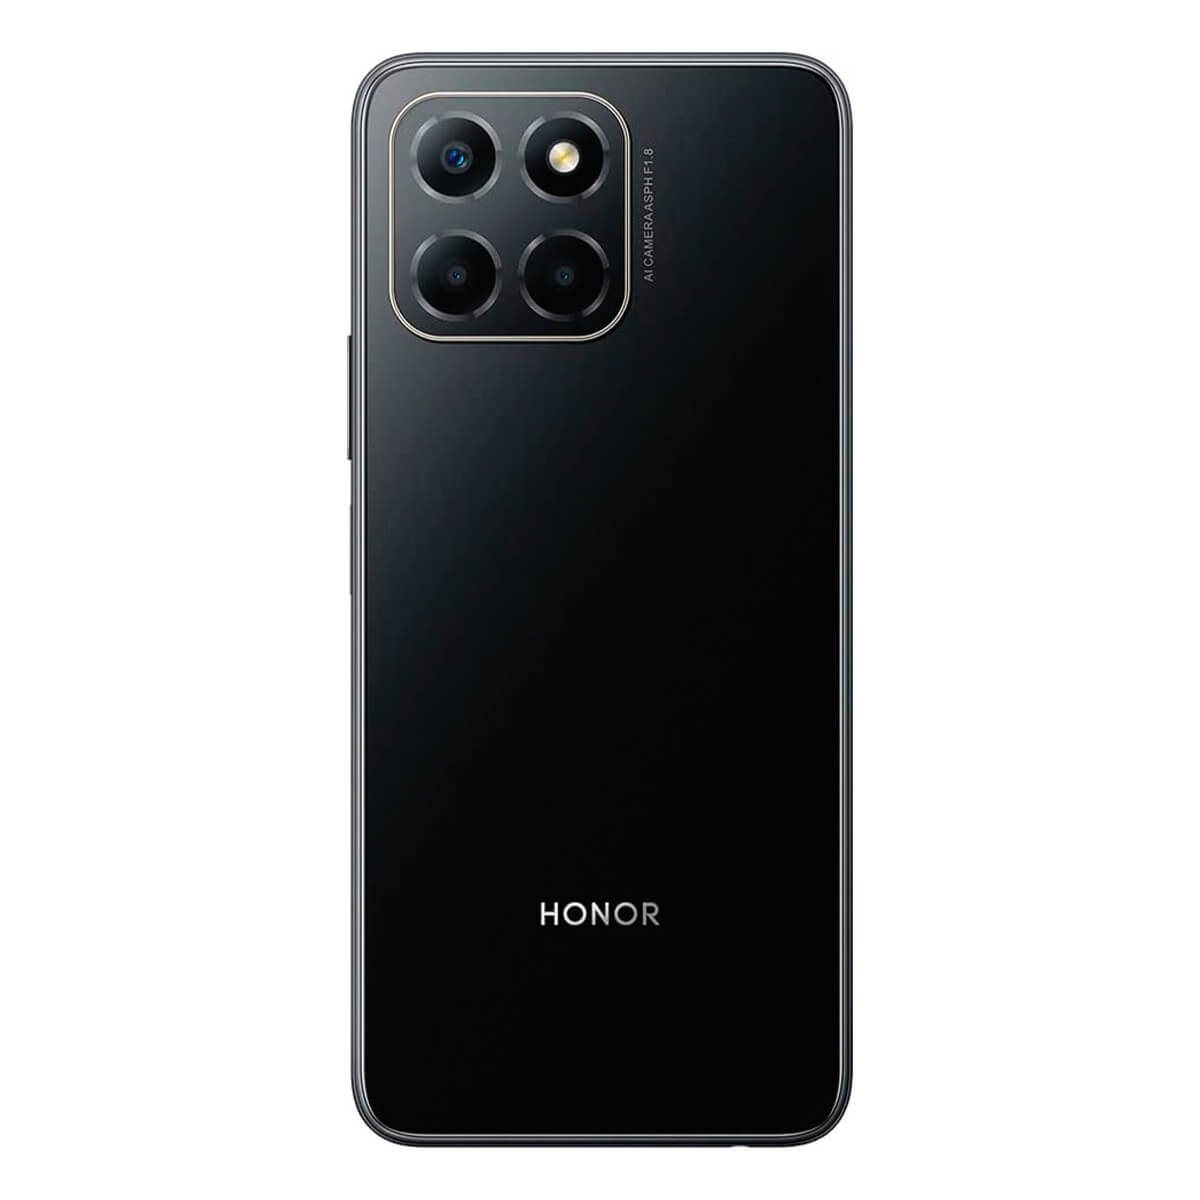 Honor X6 4 Go/64 Go Noir (Noir Minuit) Double SIM